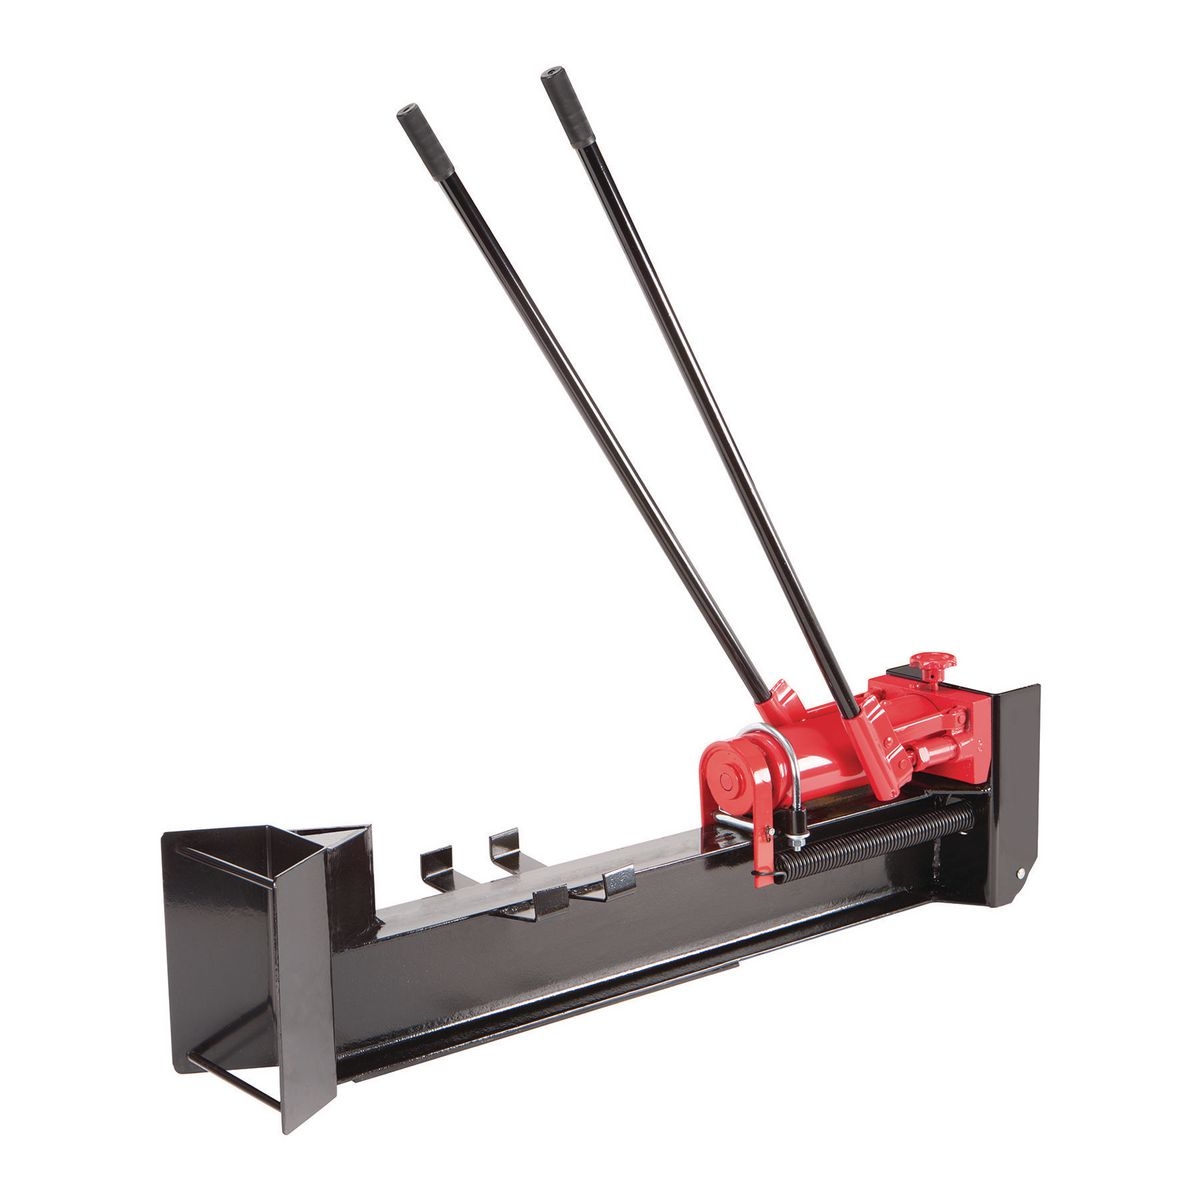 CENTRAL MACHINERY 10 Ton Hydraulic Log Splitter – Item 67090 / 39981